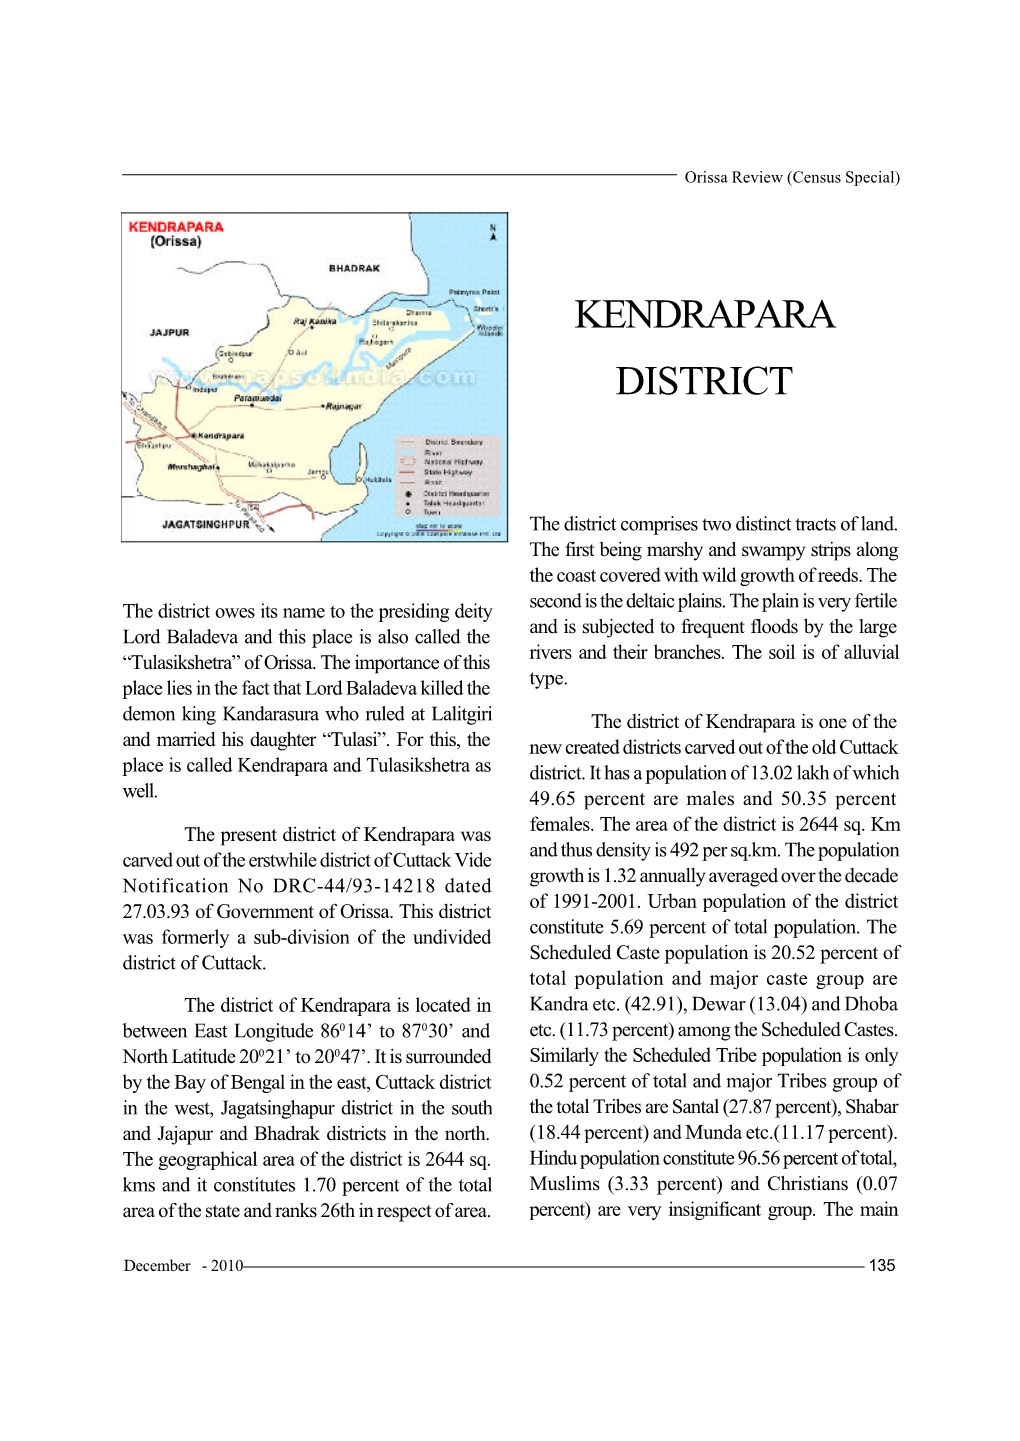 Kendrapara District